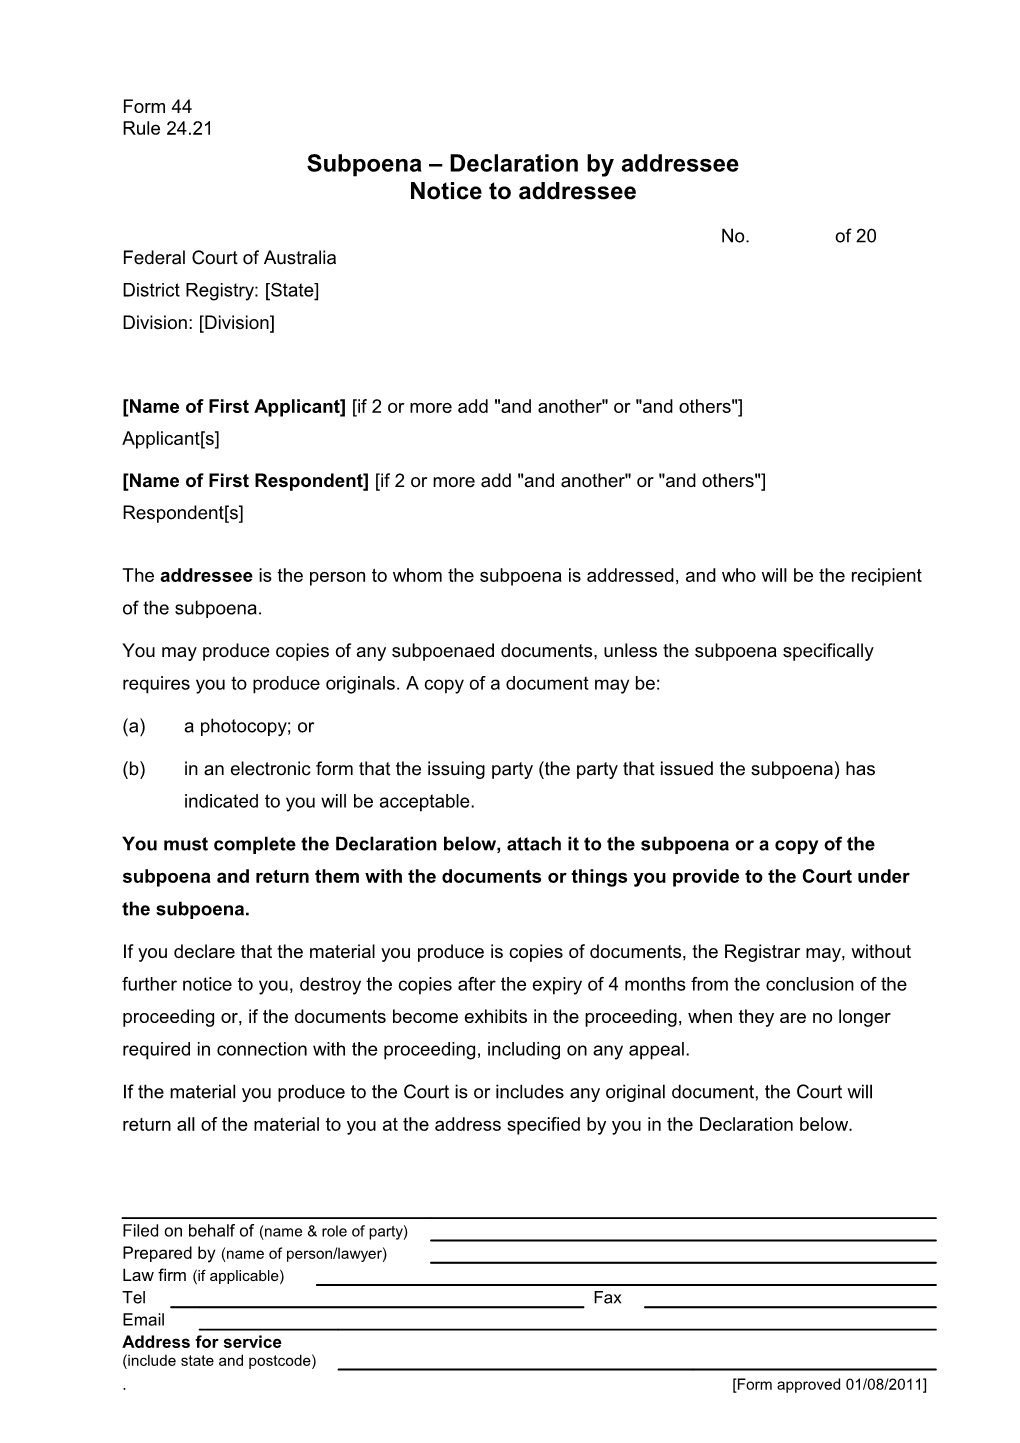 Form 44: Subpoena Declaration by Addressee Notice to Addressee